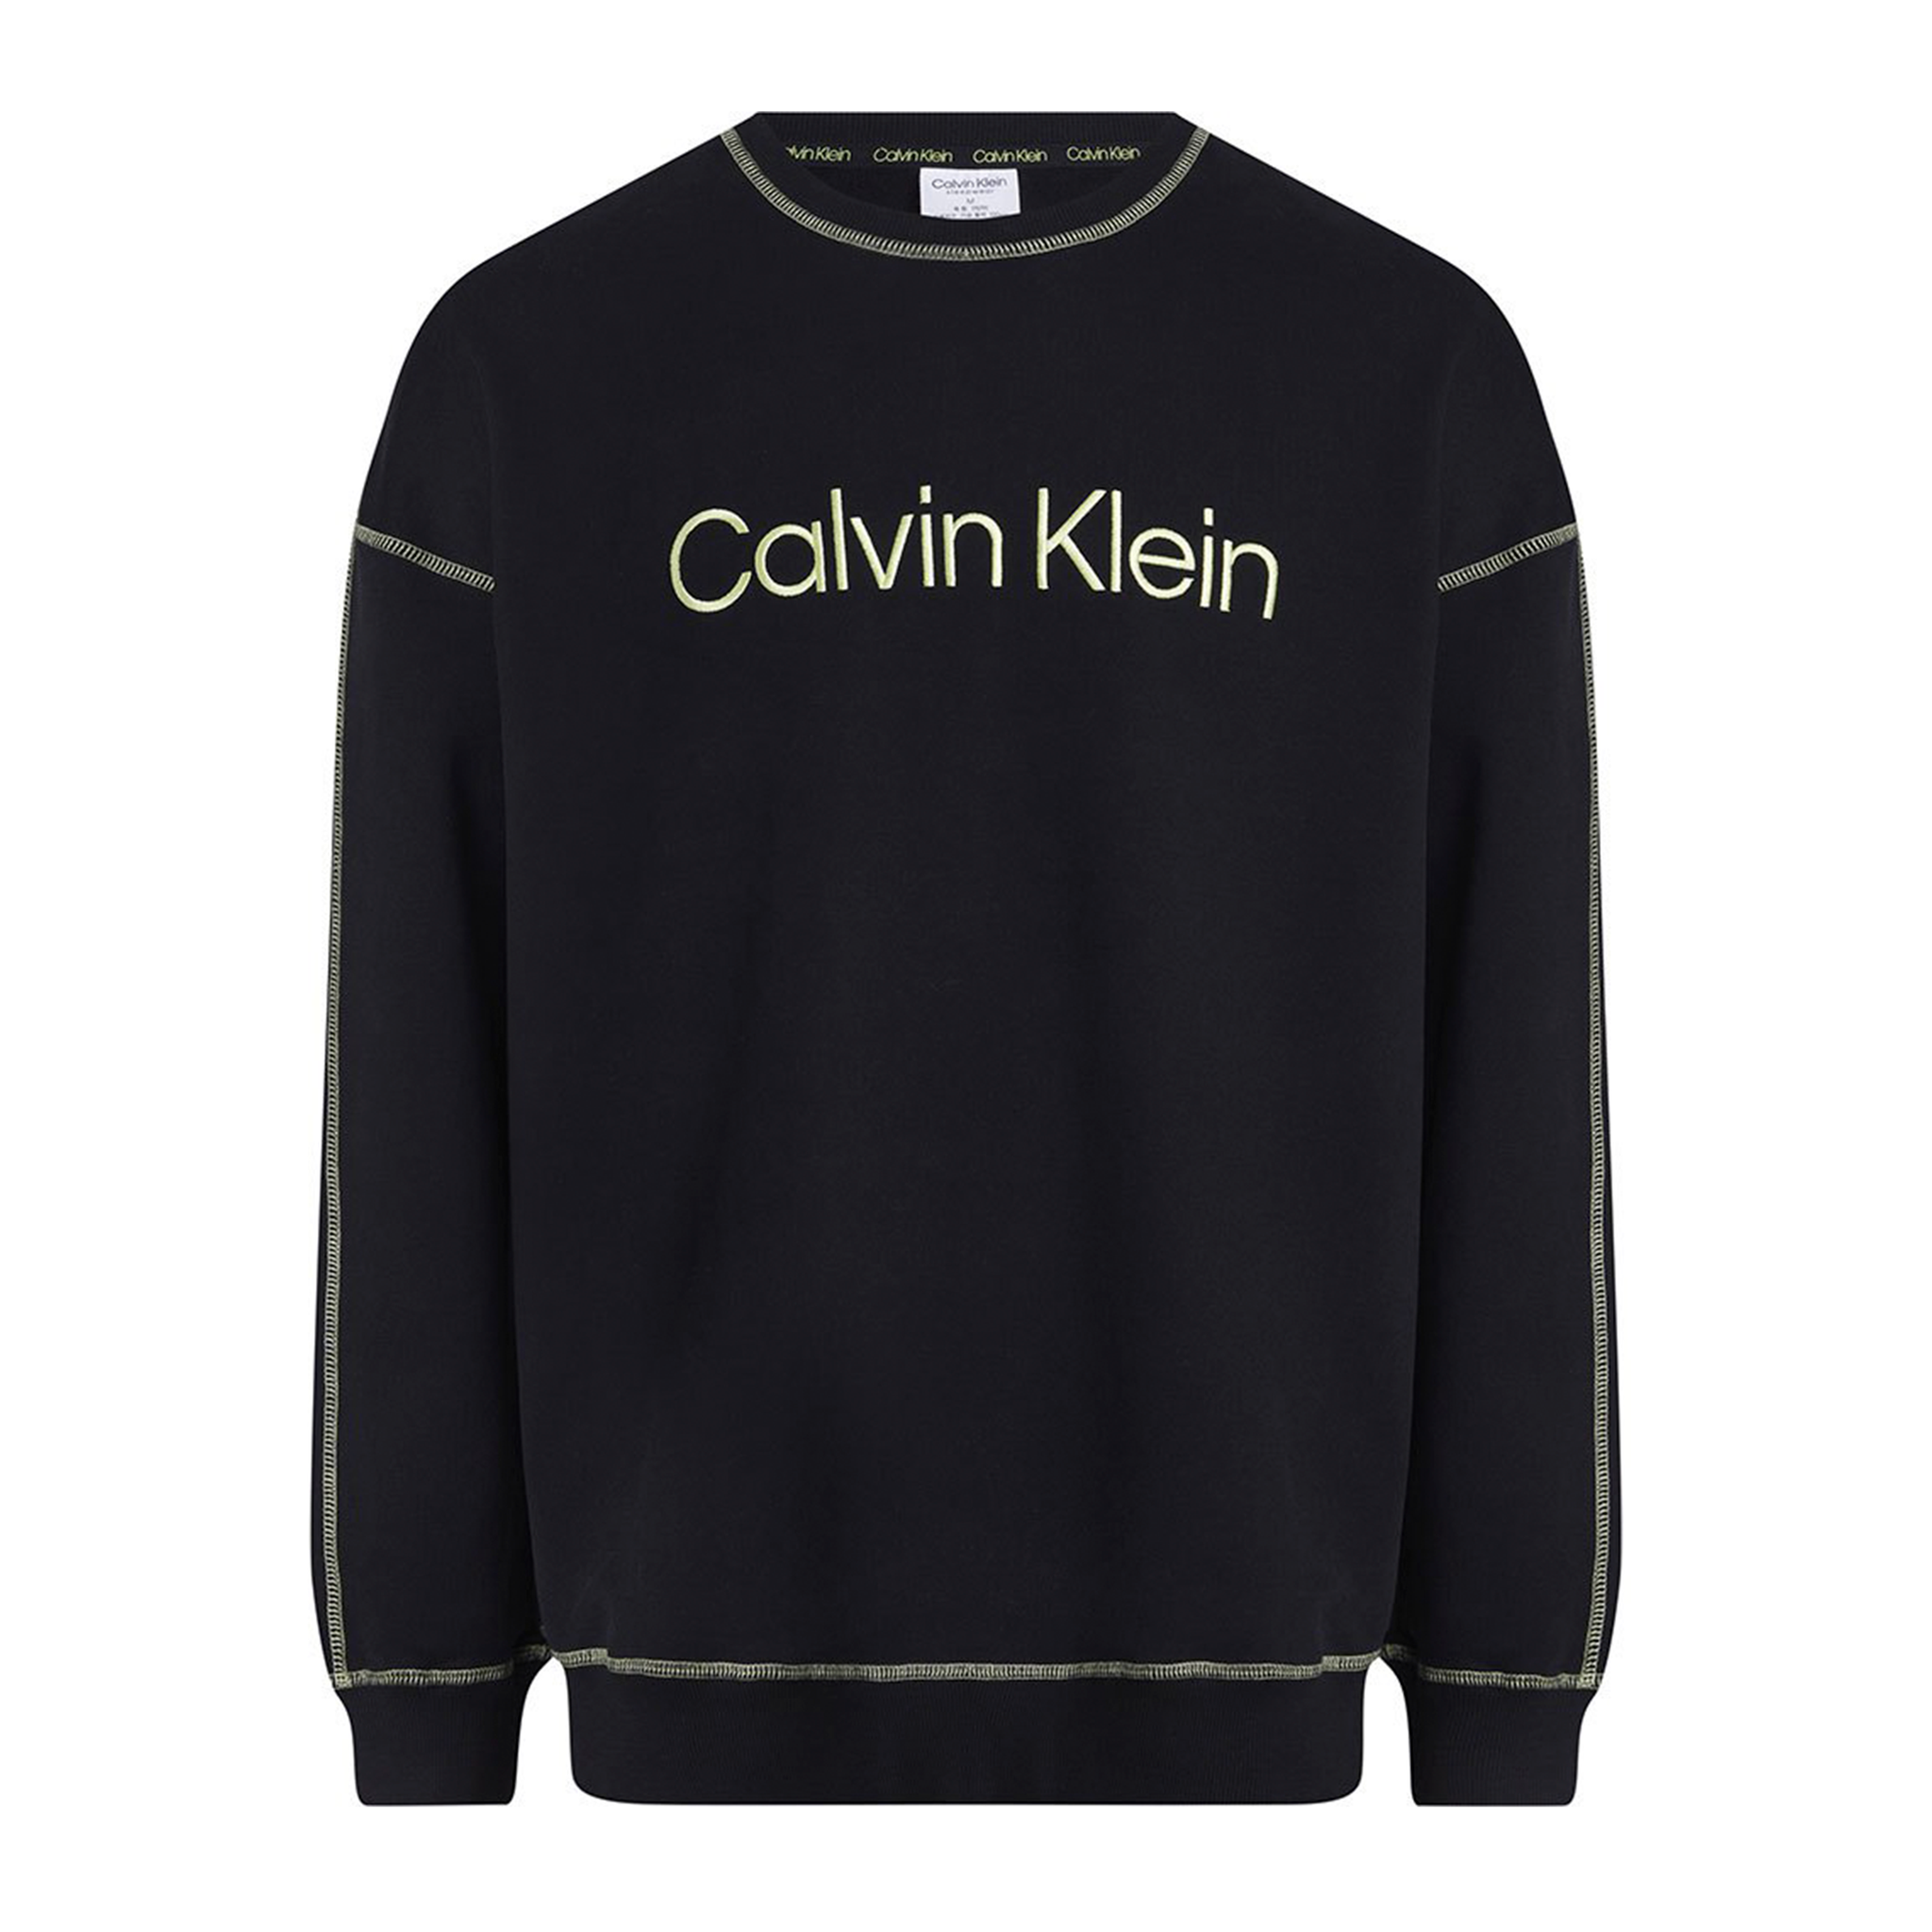 Calvin Klein Loungewear Set Long Sleeve Black Sweatshirt